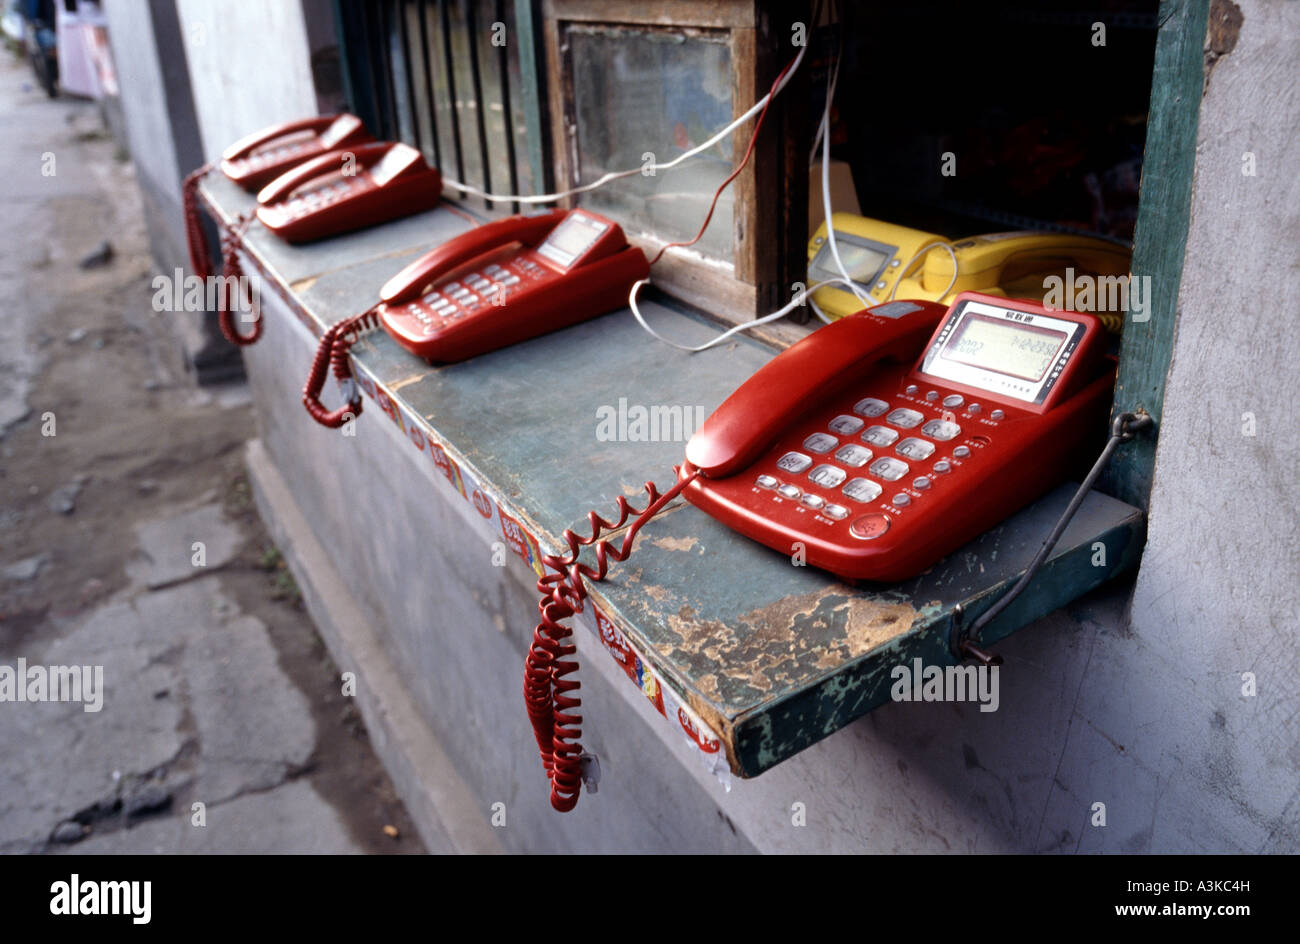 Landline phones waiting for customers in Beijing's Dazhalan hutongs. Stock Photo